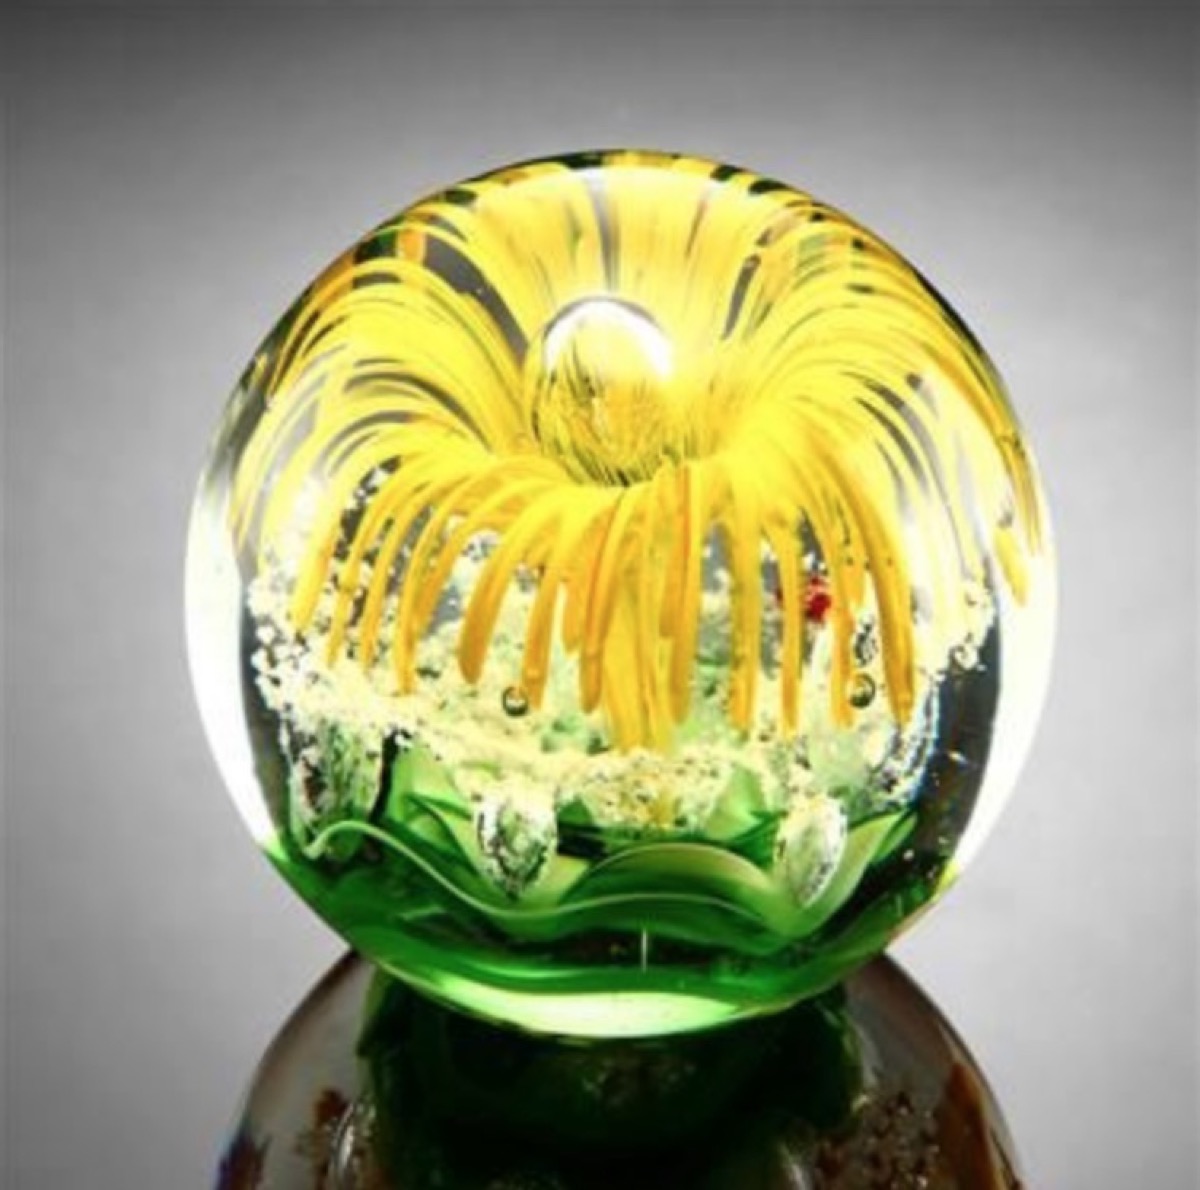 glass flower orb, 90s interior design